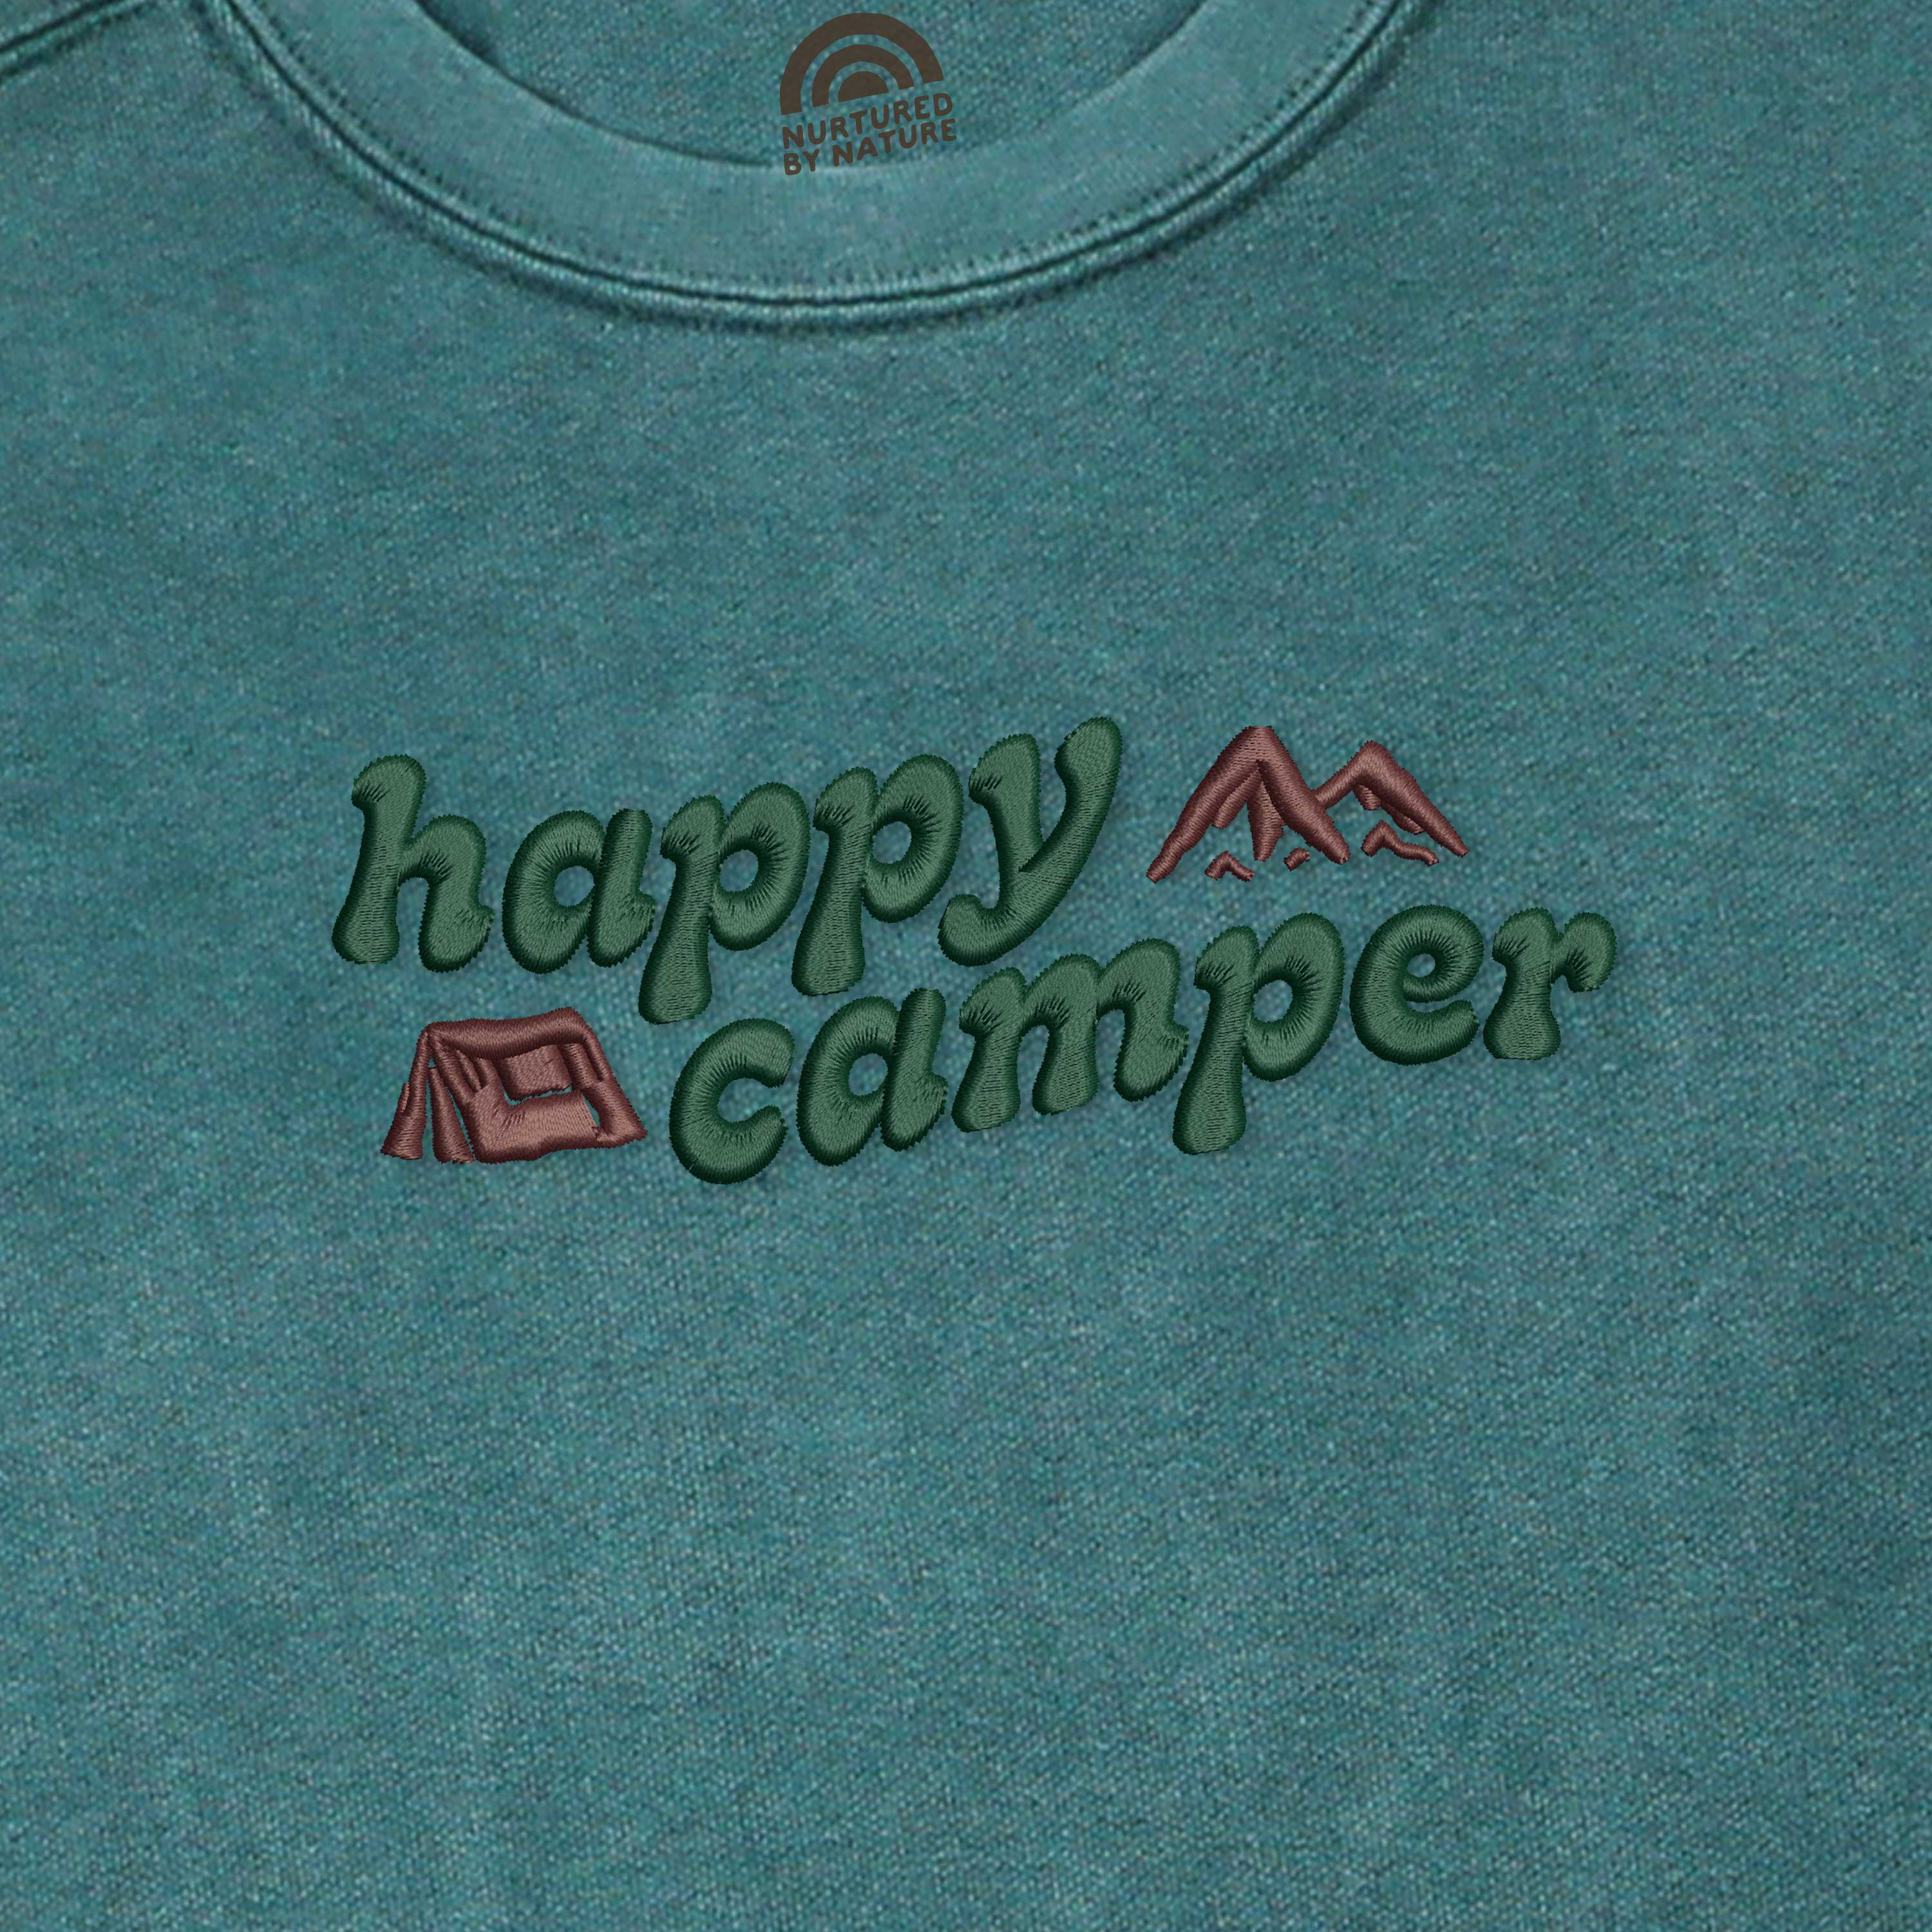 files/Happy-Camper-Embroidered-Crewneck-Sweatshirt-with-Tentcloseup.jpg